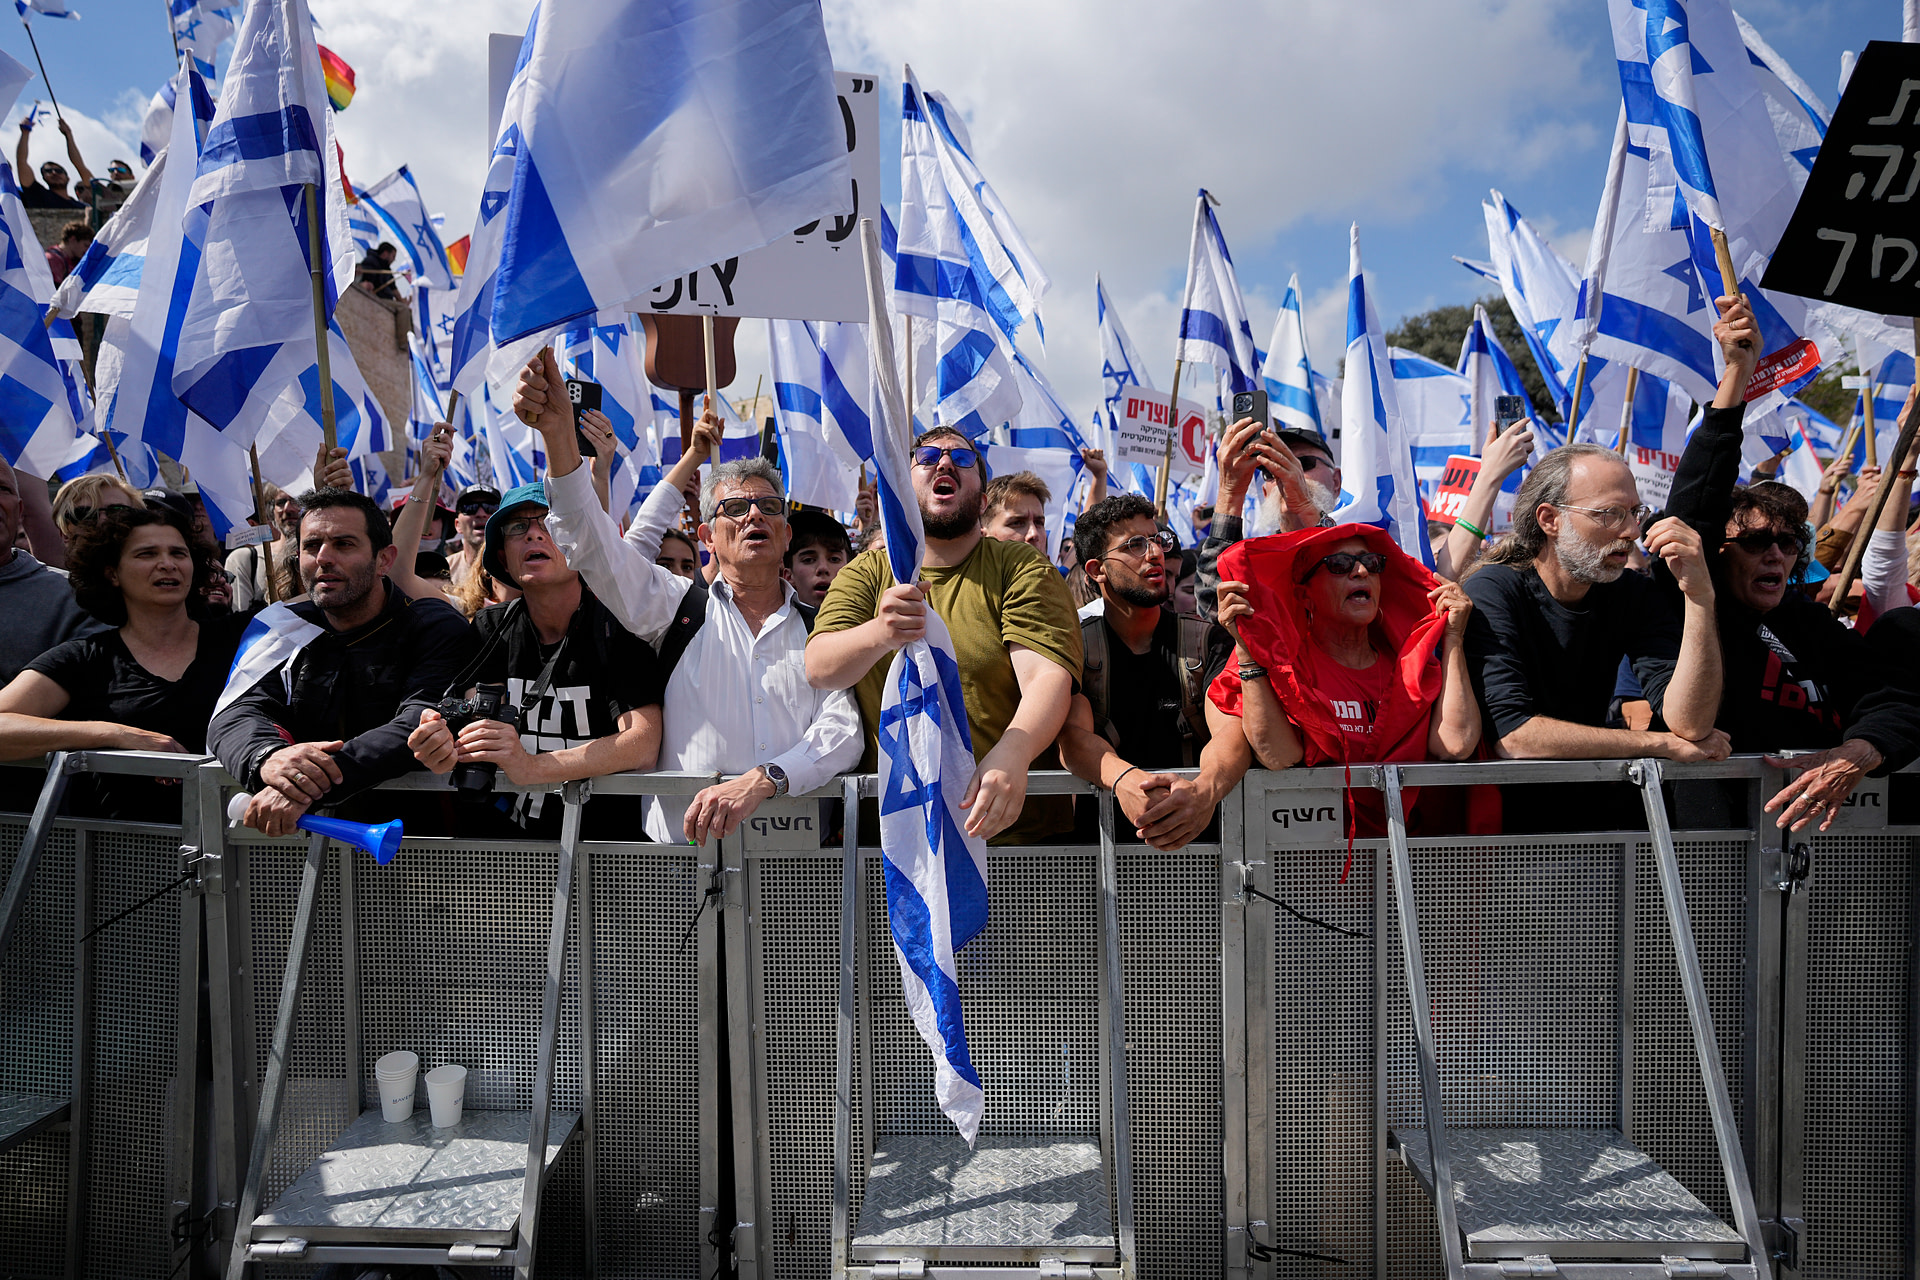 Israeli unions launch strike, upping pressure on Netanyahu